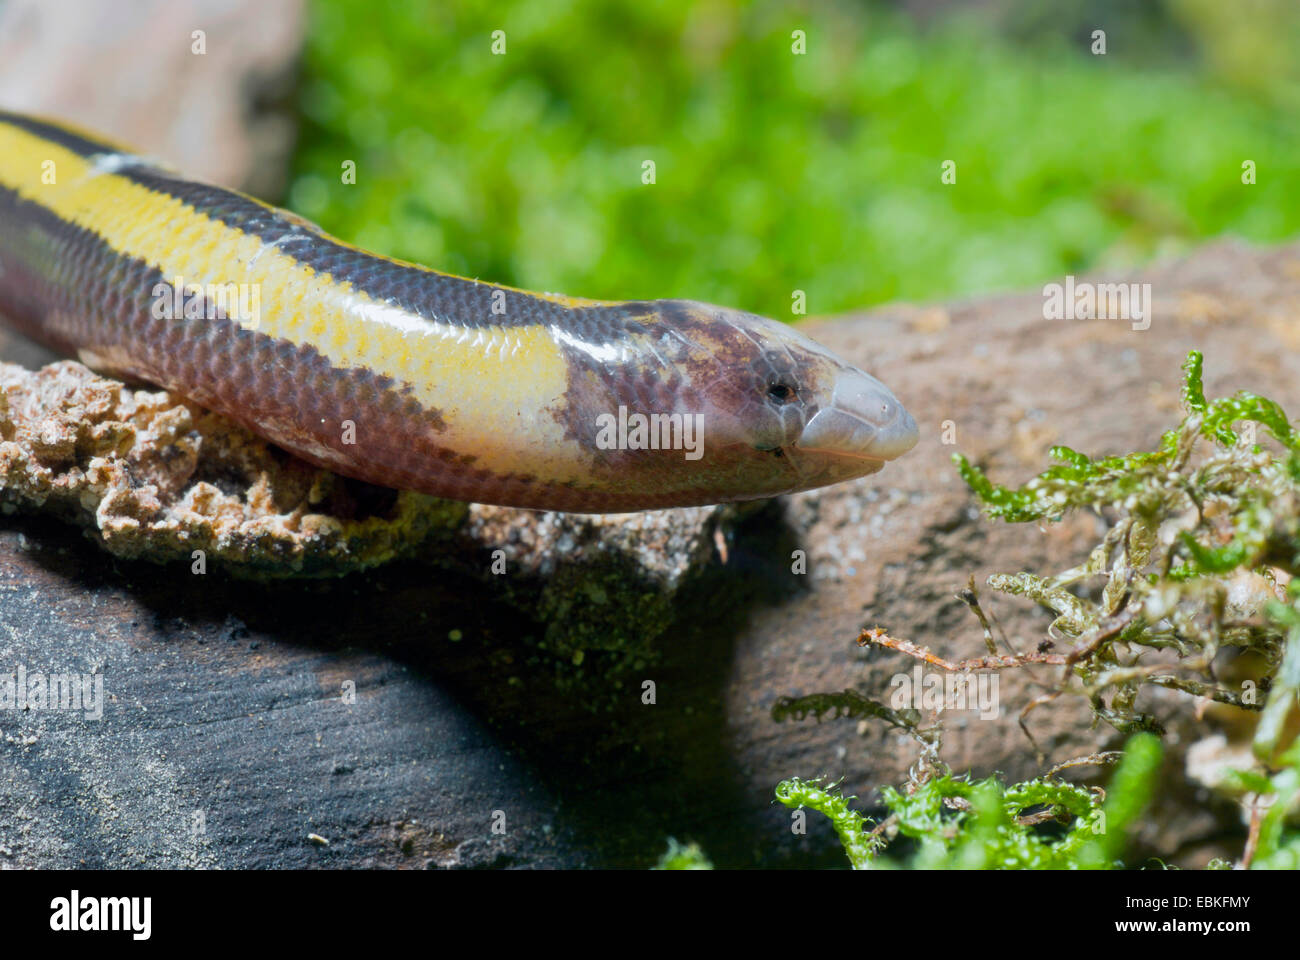 El gusano Gyldenstolpe Skink (Isopachys gyldenstolpei), Retrato Foto de stock